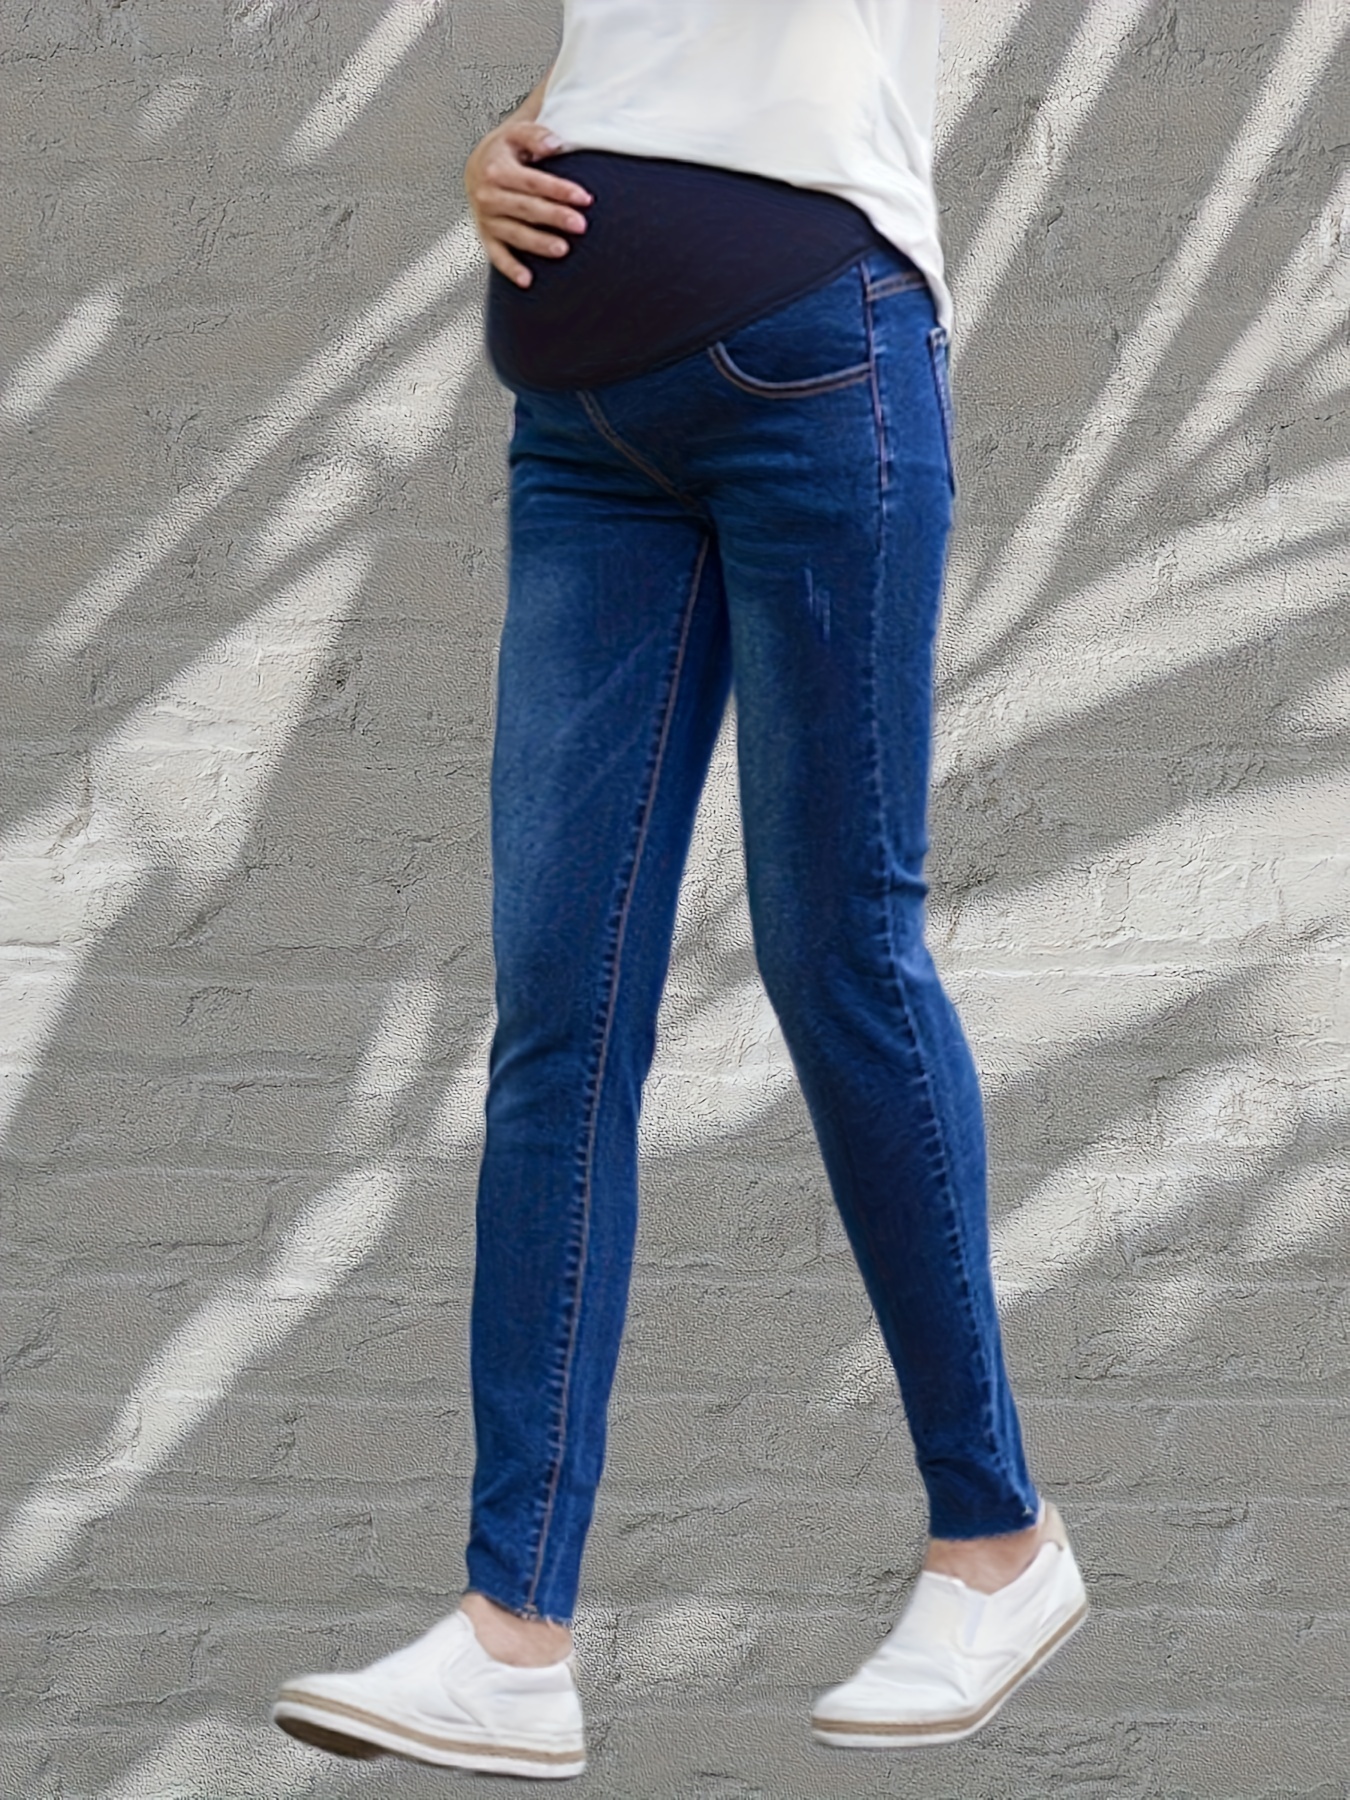 Maternity Pregnancy Women Skinny Trousers Slim Jeans Elastic